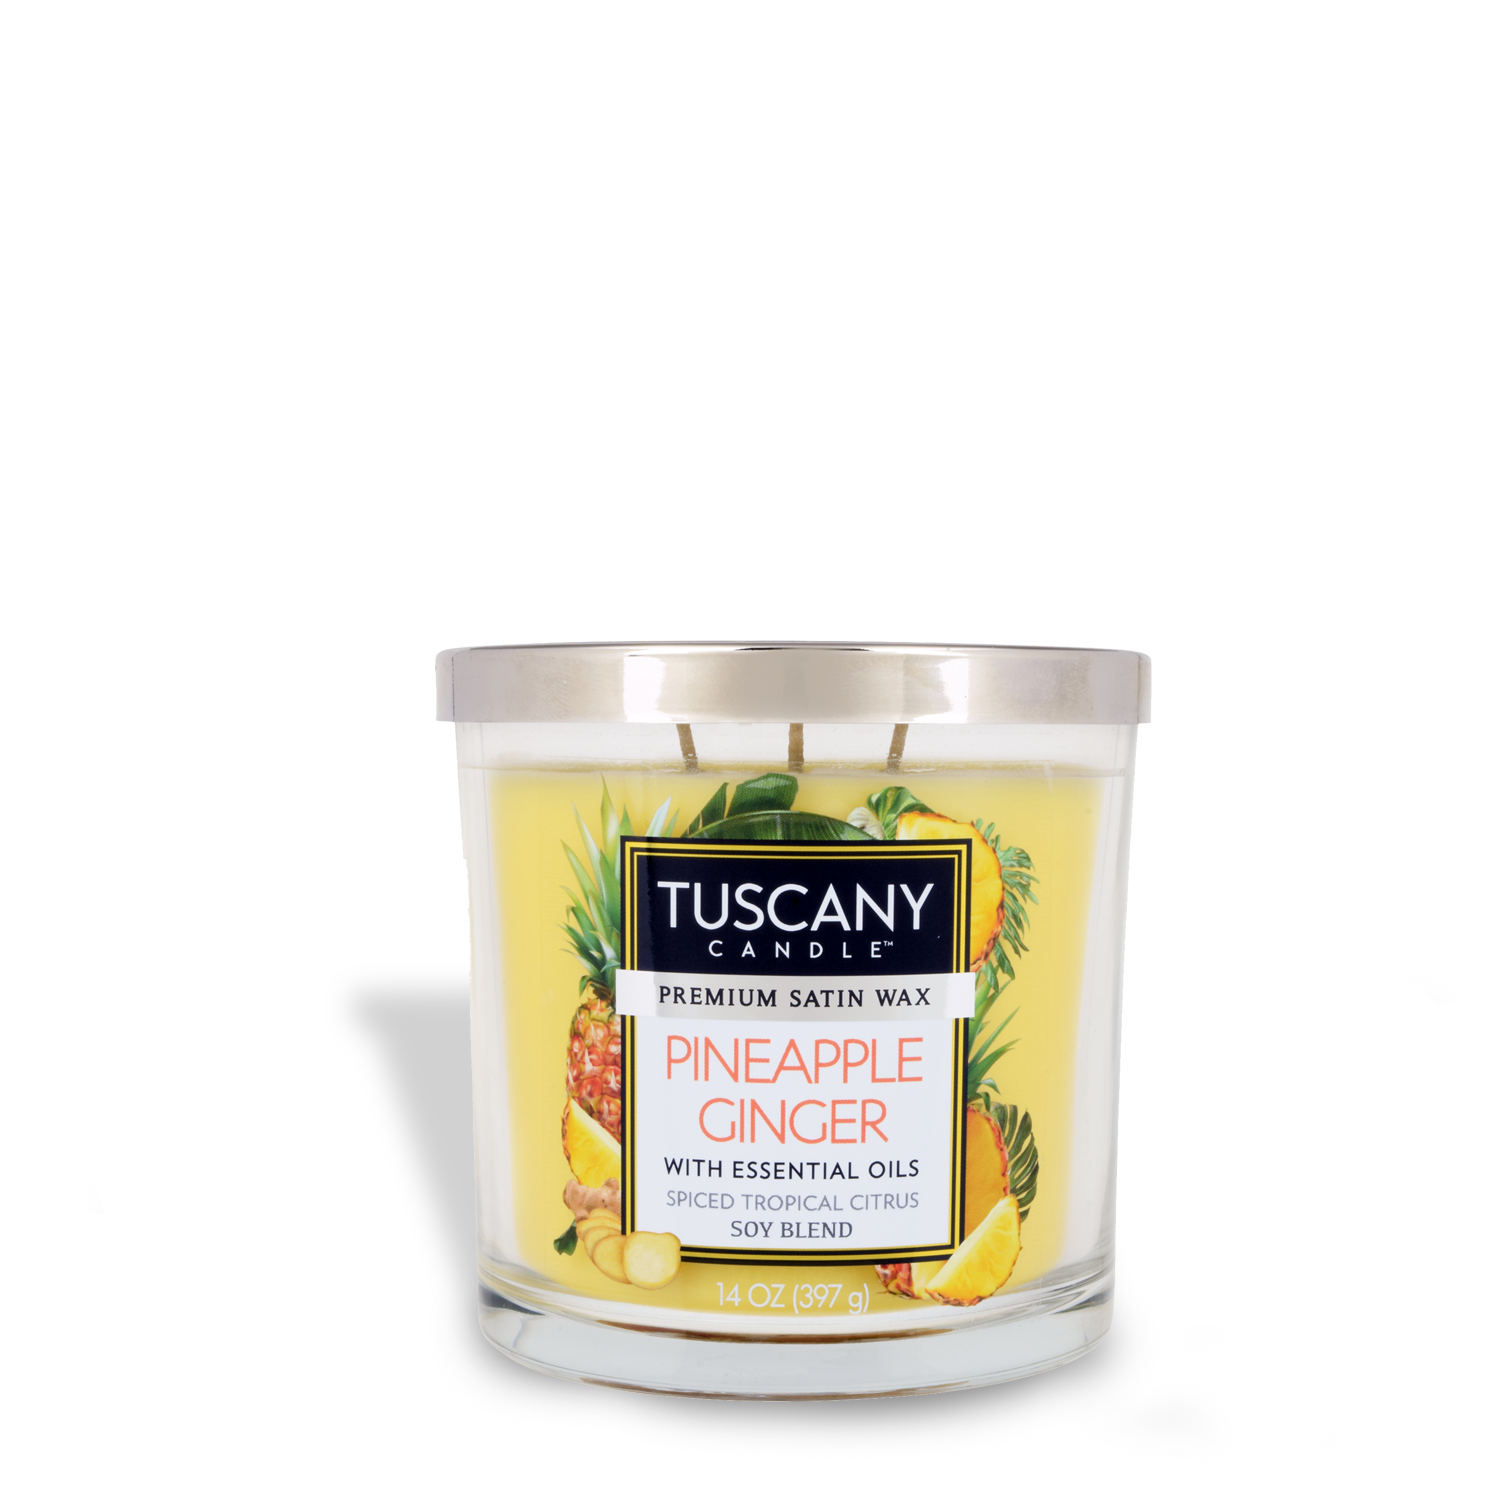 Tuscany Candle Fall Wax Melts Reviews - 2018